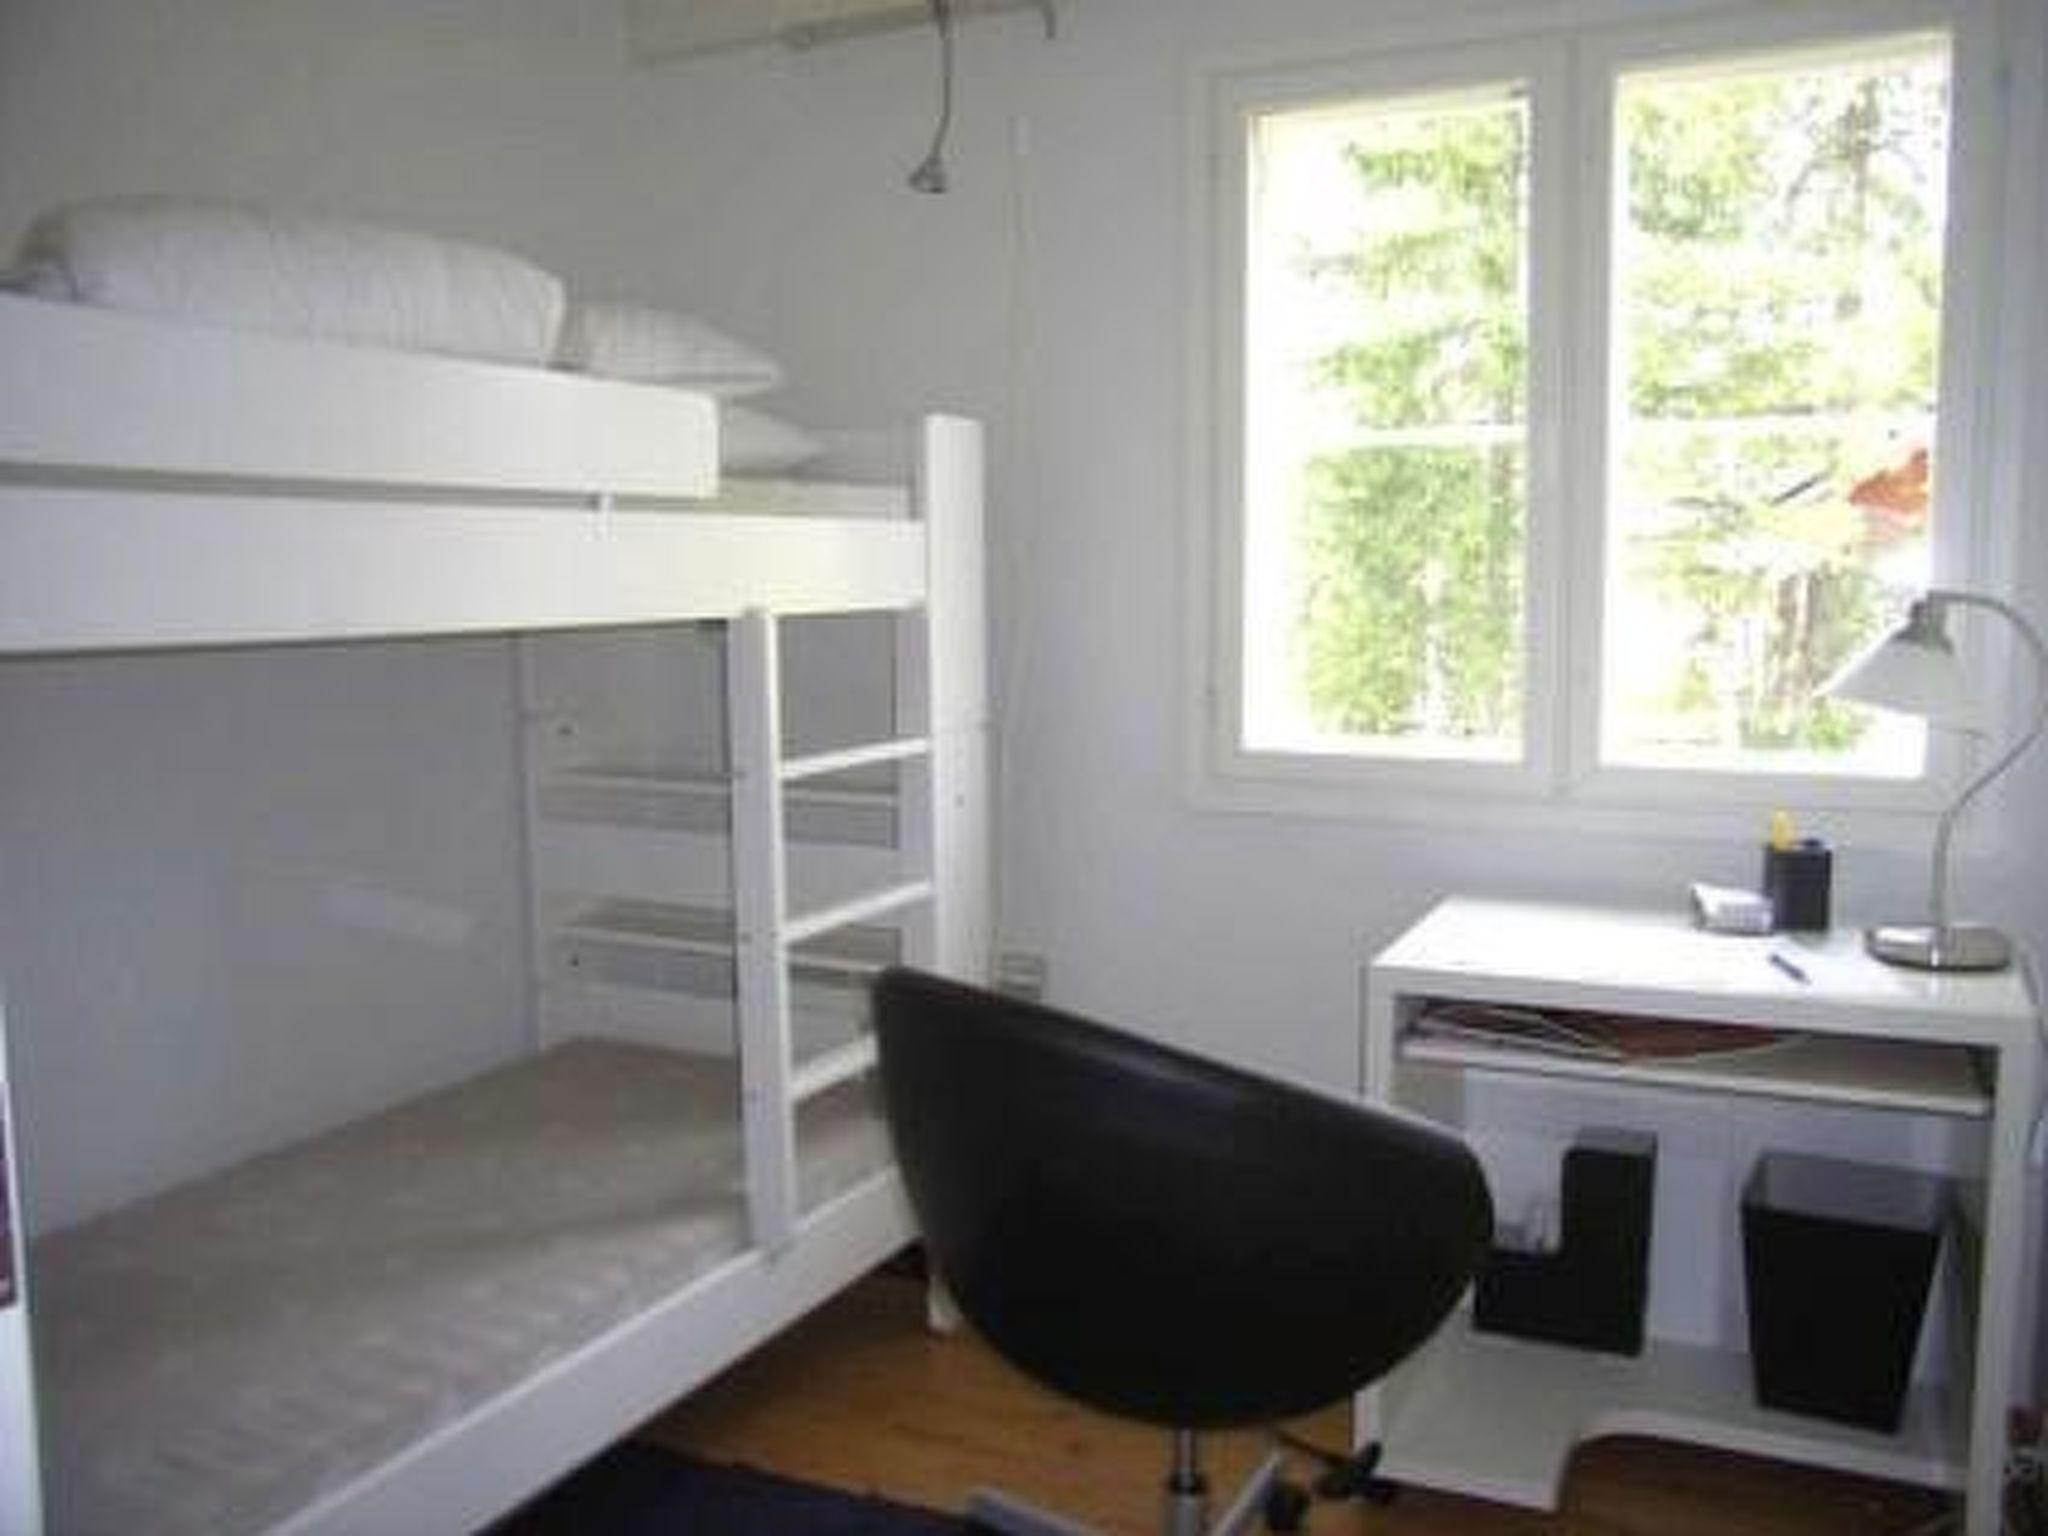 Photo 15 - 7 bedroom House in Kuopio with sauna